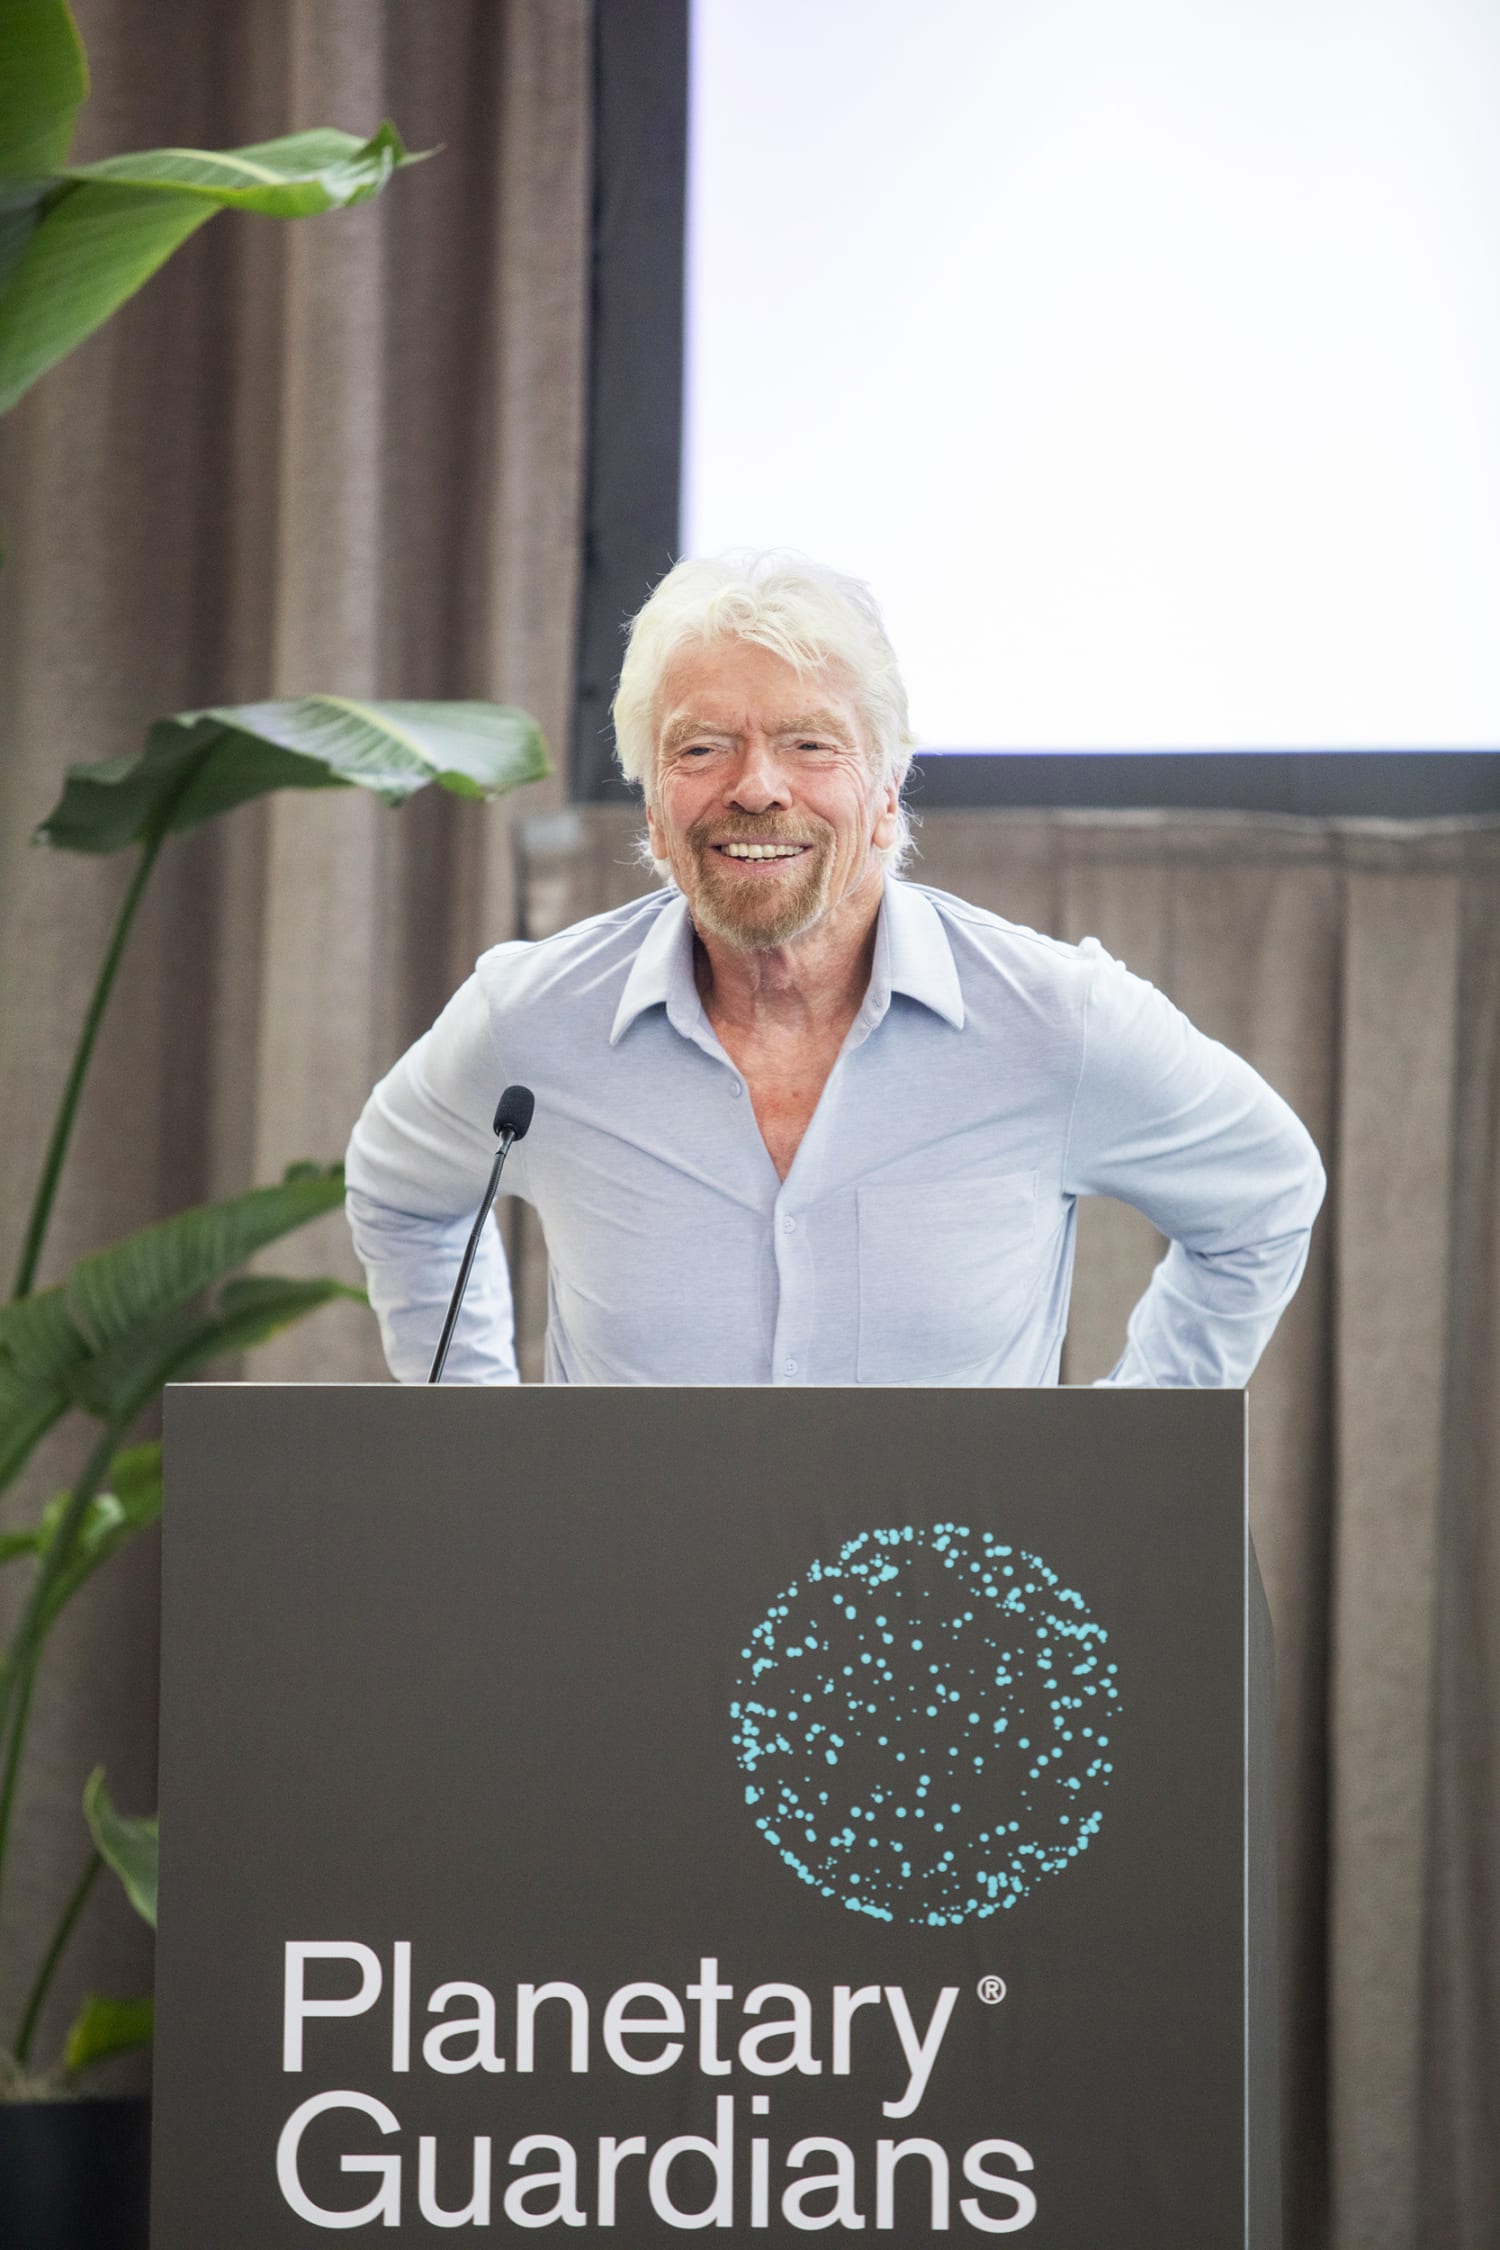 Richard Branson becomes an Ambassador for the UNITED24 fundraising platform